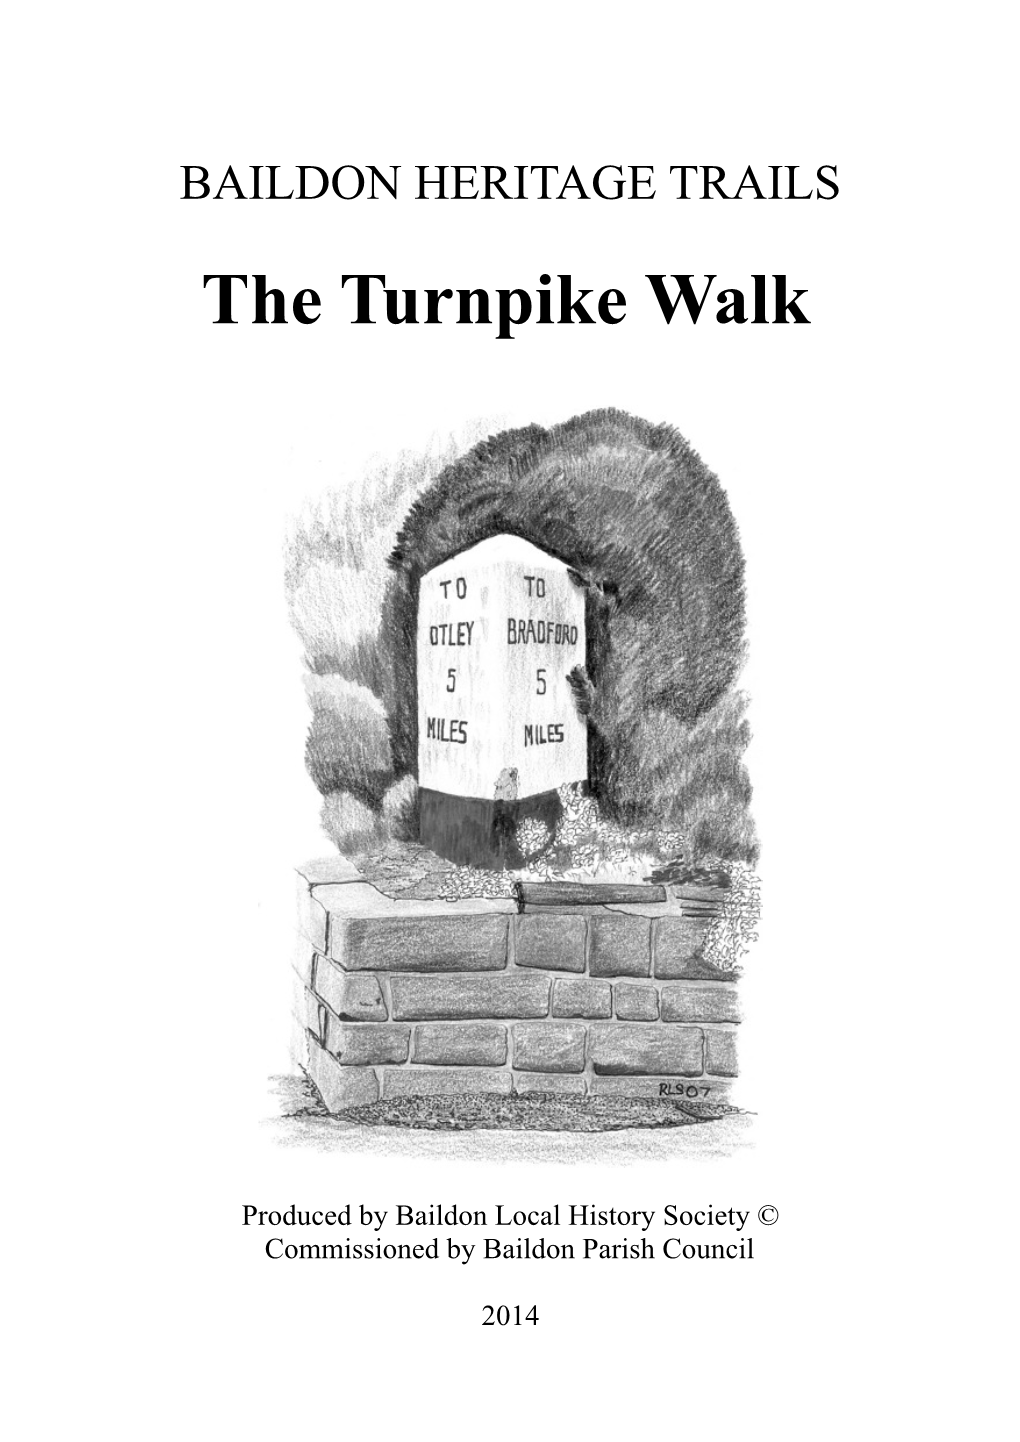 The Turnpike Walk